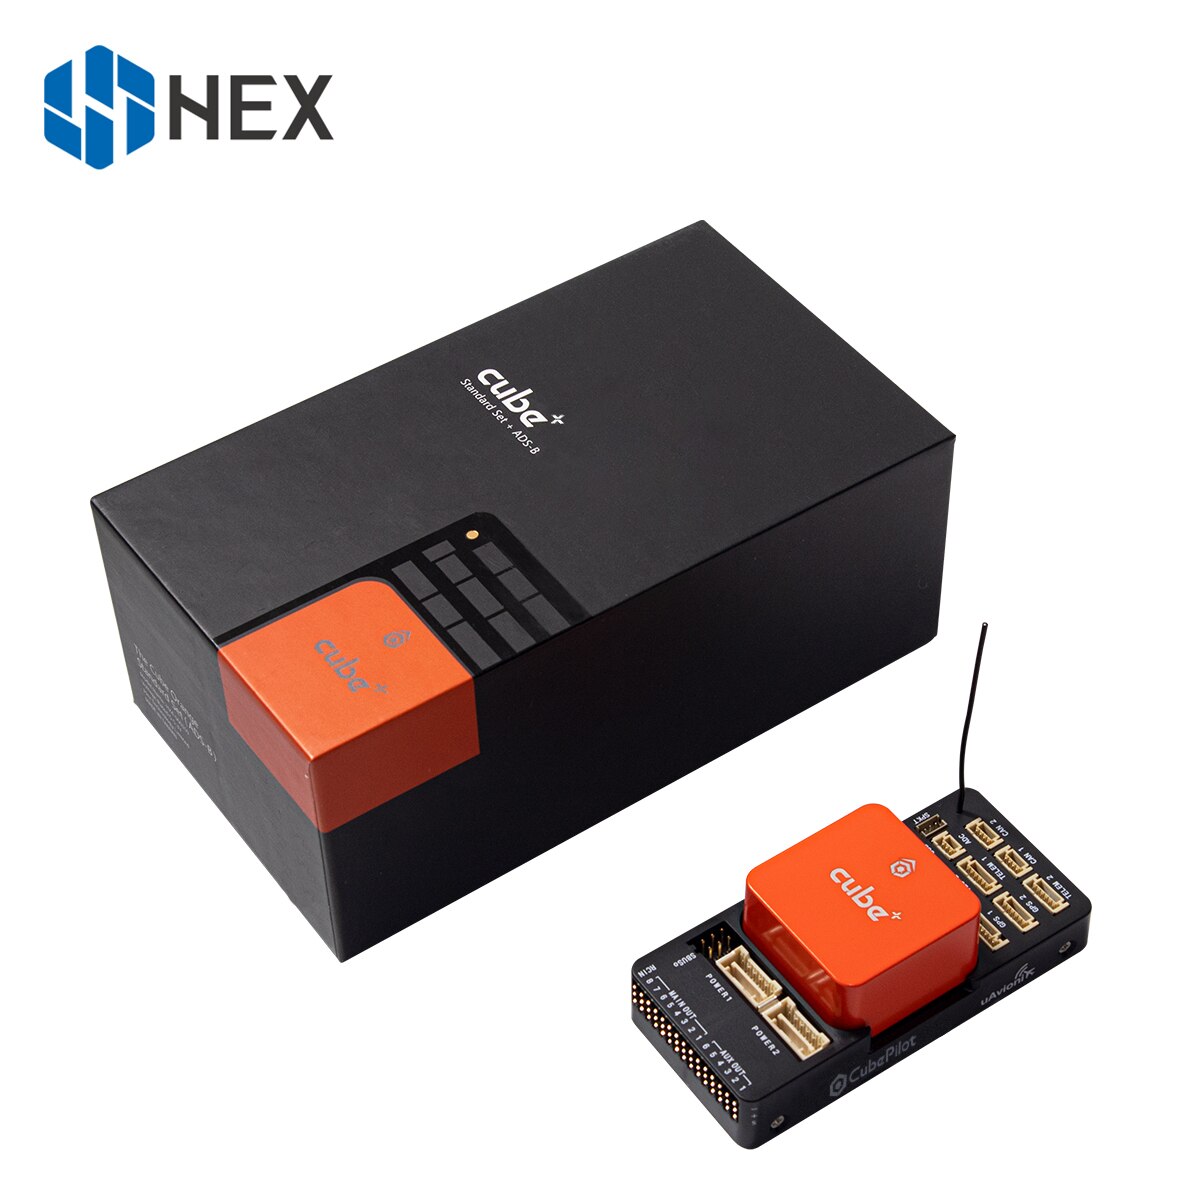 HEX Pixhawk 2.1 PX4 PIX 32 Bit Flight Controller Autopilot - The Cube Orange + Standard Set W/ Here 3 GPS &amp; ADS-B Carrier Board